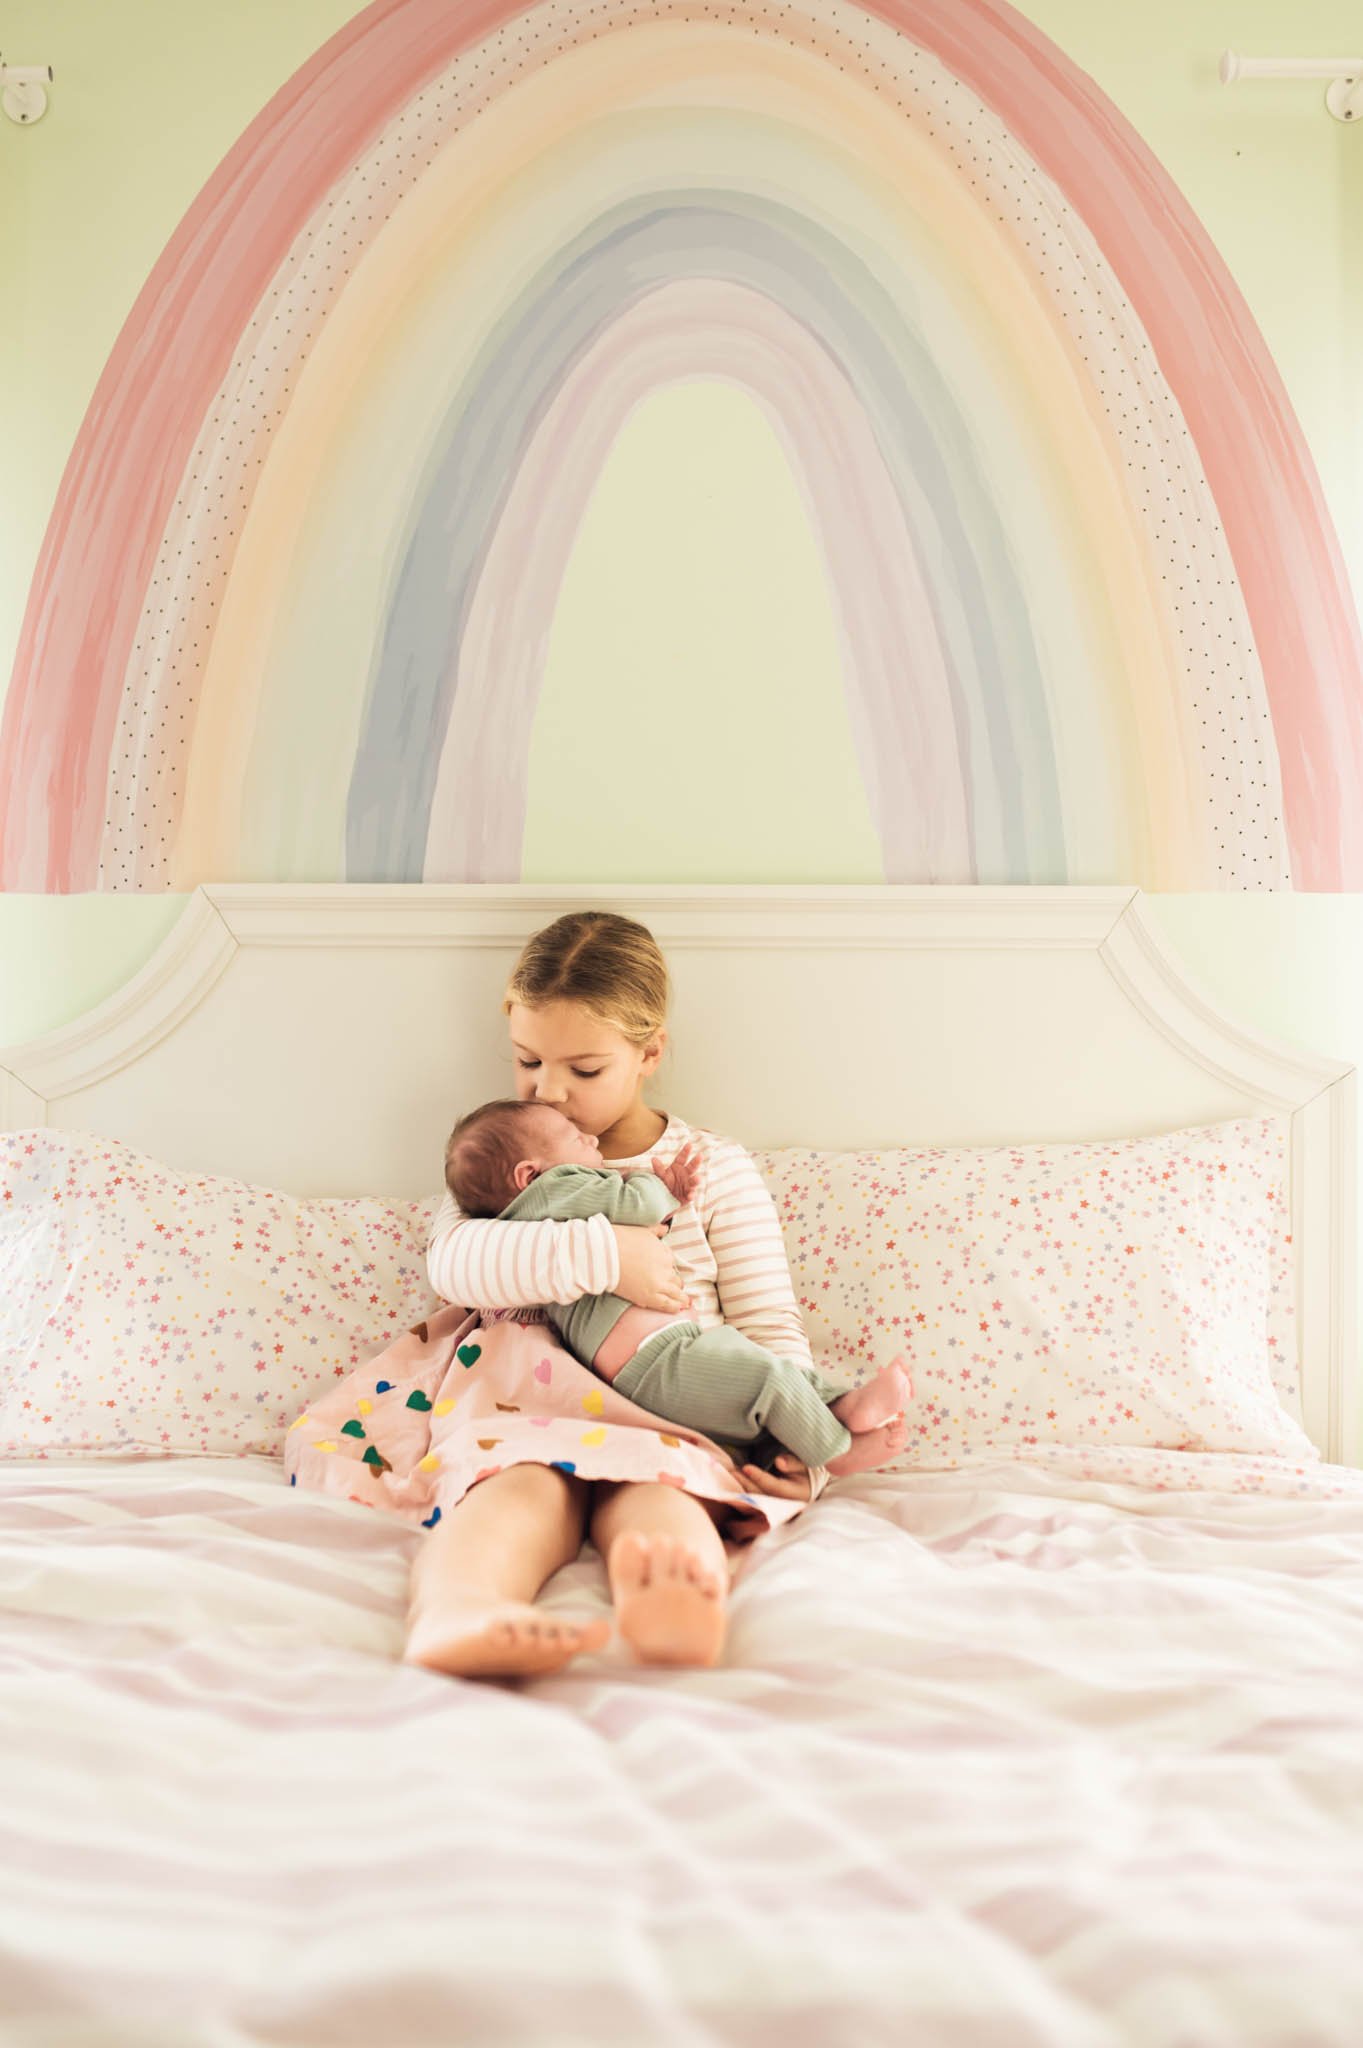 Big sister cuddles baby, rainbow painting